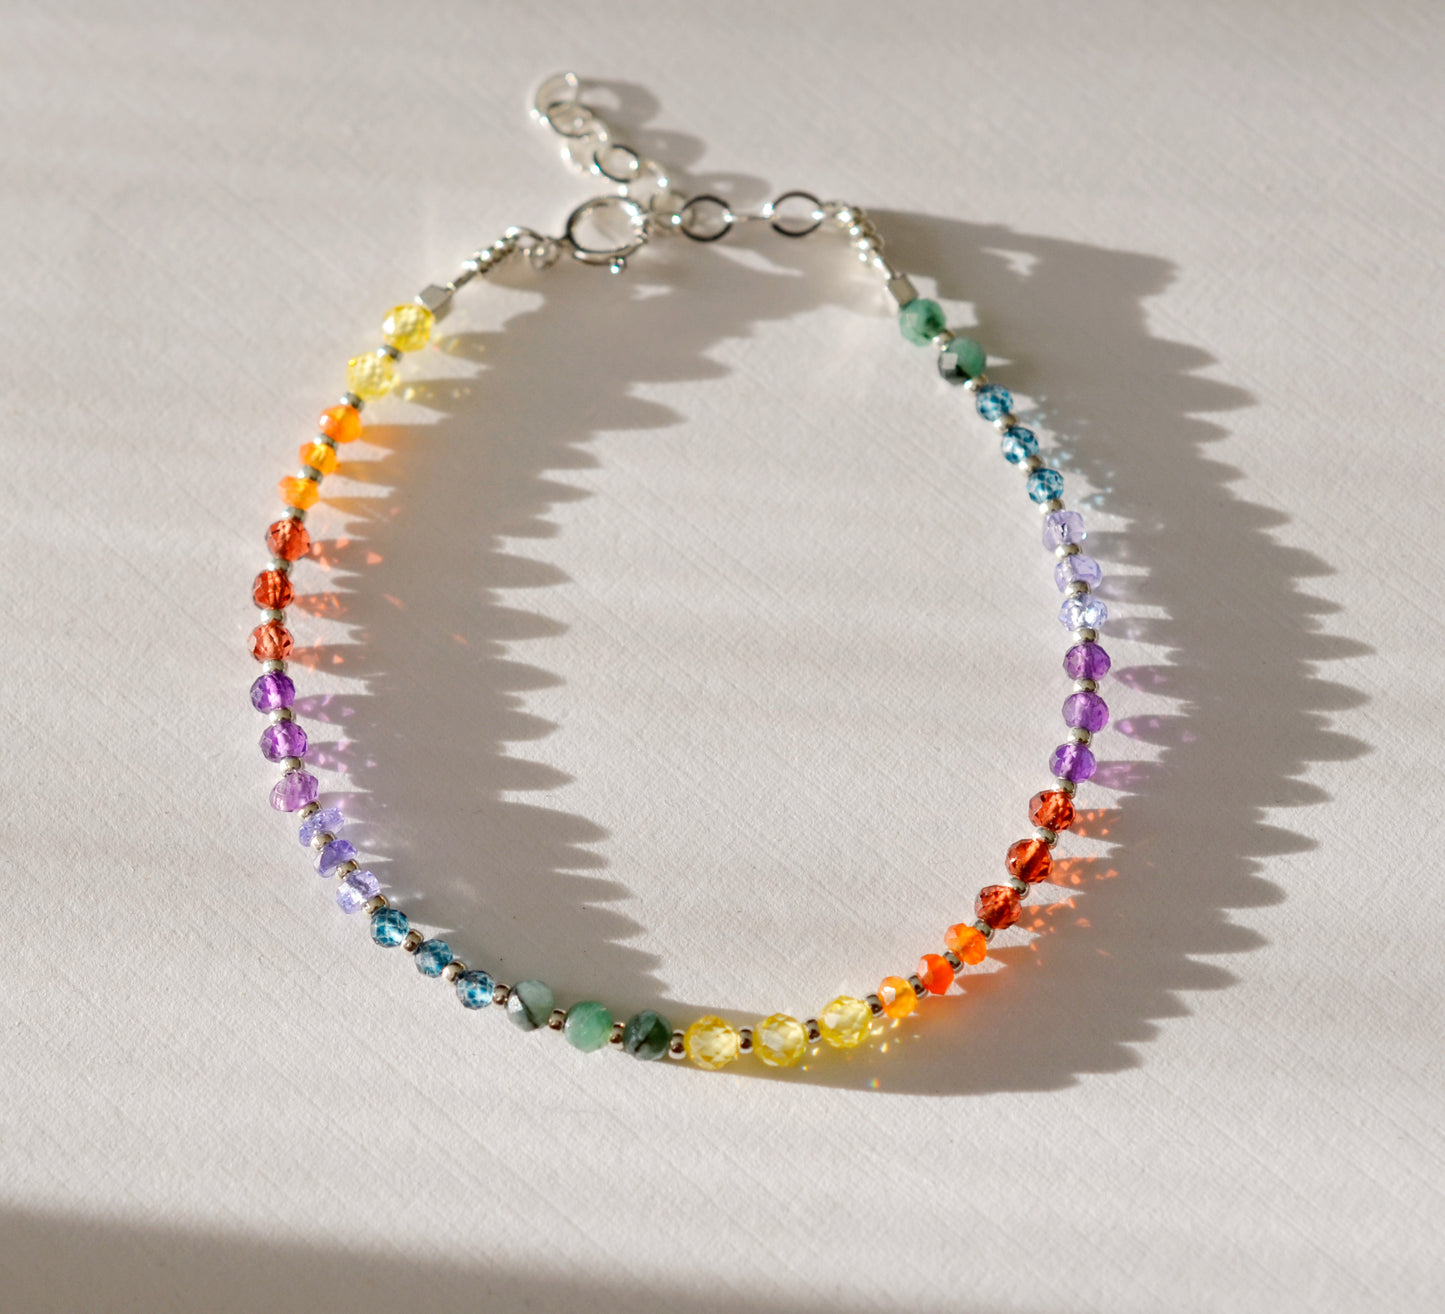 Handmade real gemstone bracelet for the Chakras or Pride. Stones include: Garnet, amethyst, topaz, emerald, carnelian, CZ, and tanzanite.